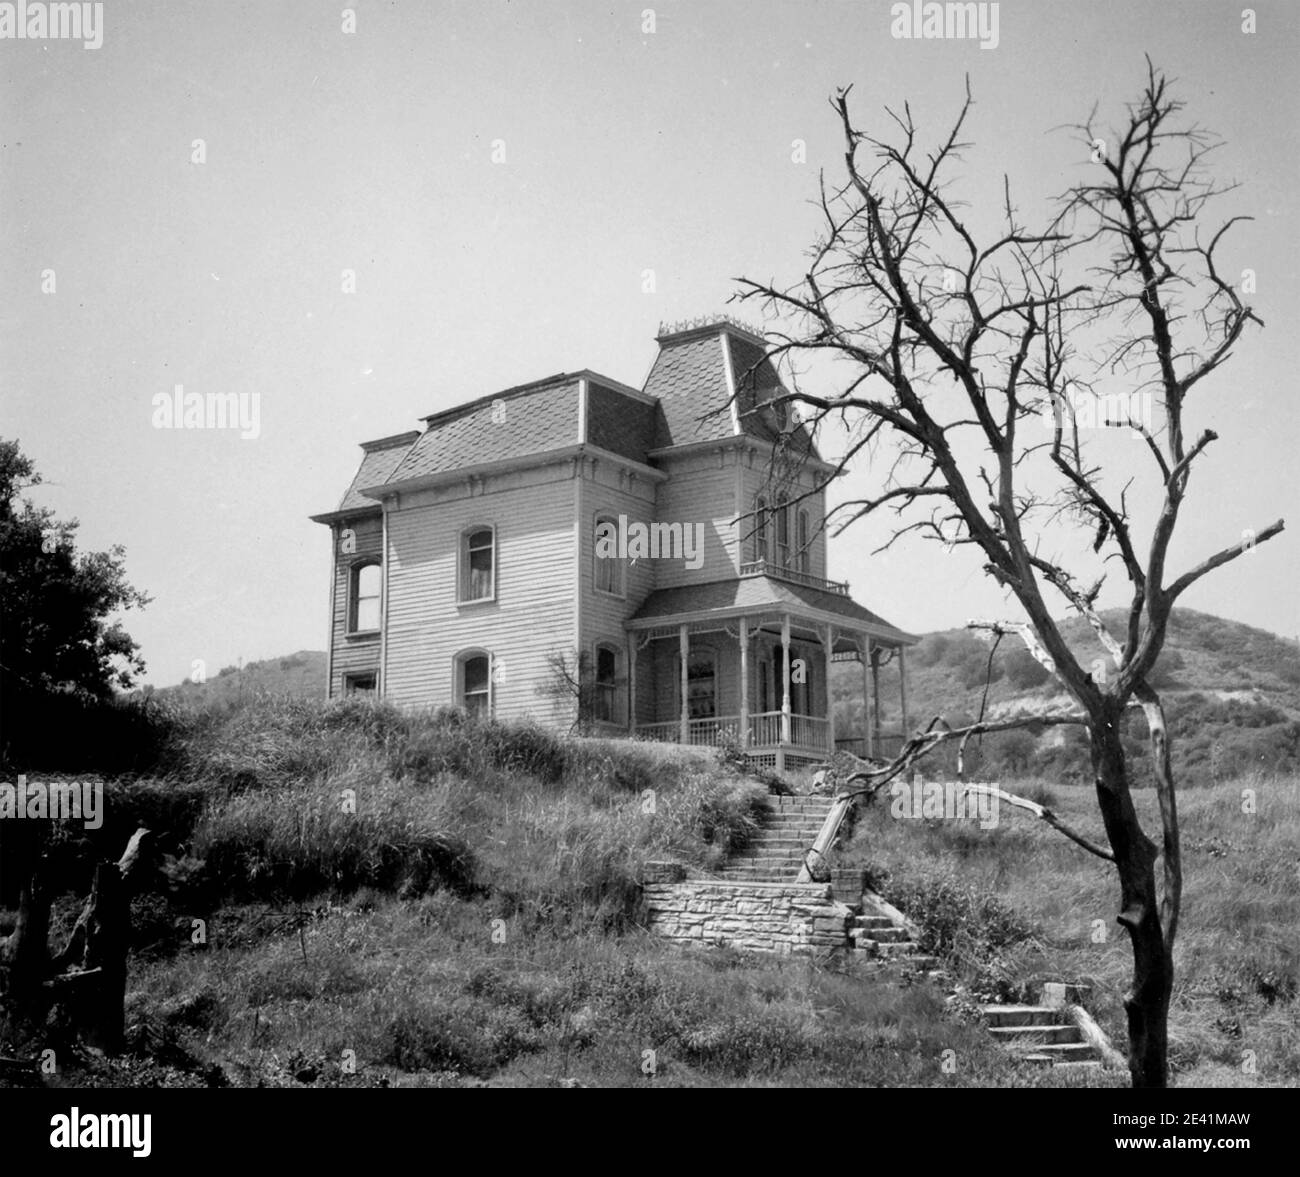 PSYCHO 1960 Paramount Pictures film, The Bates Motel set about 1964.  Courtesy Boston Globe Stock Photo - Alamy